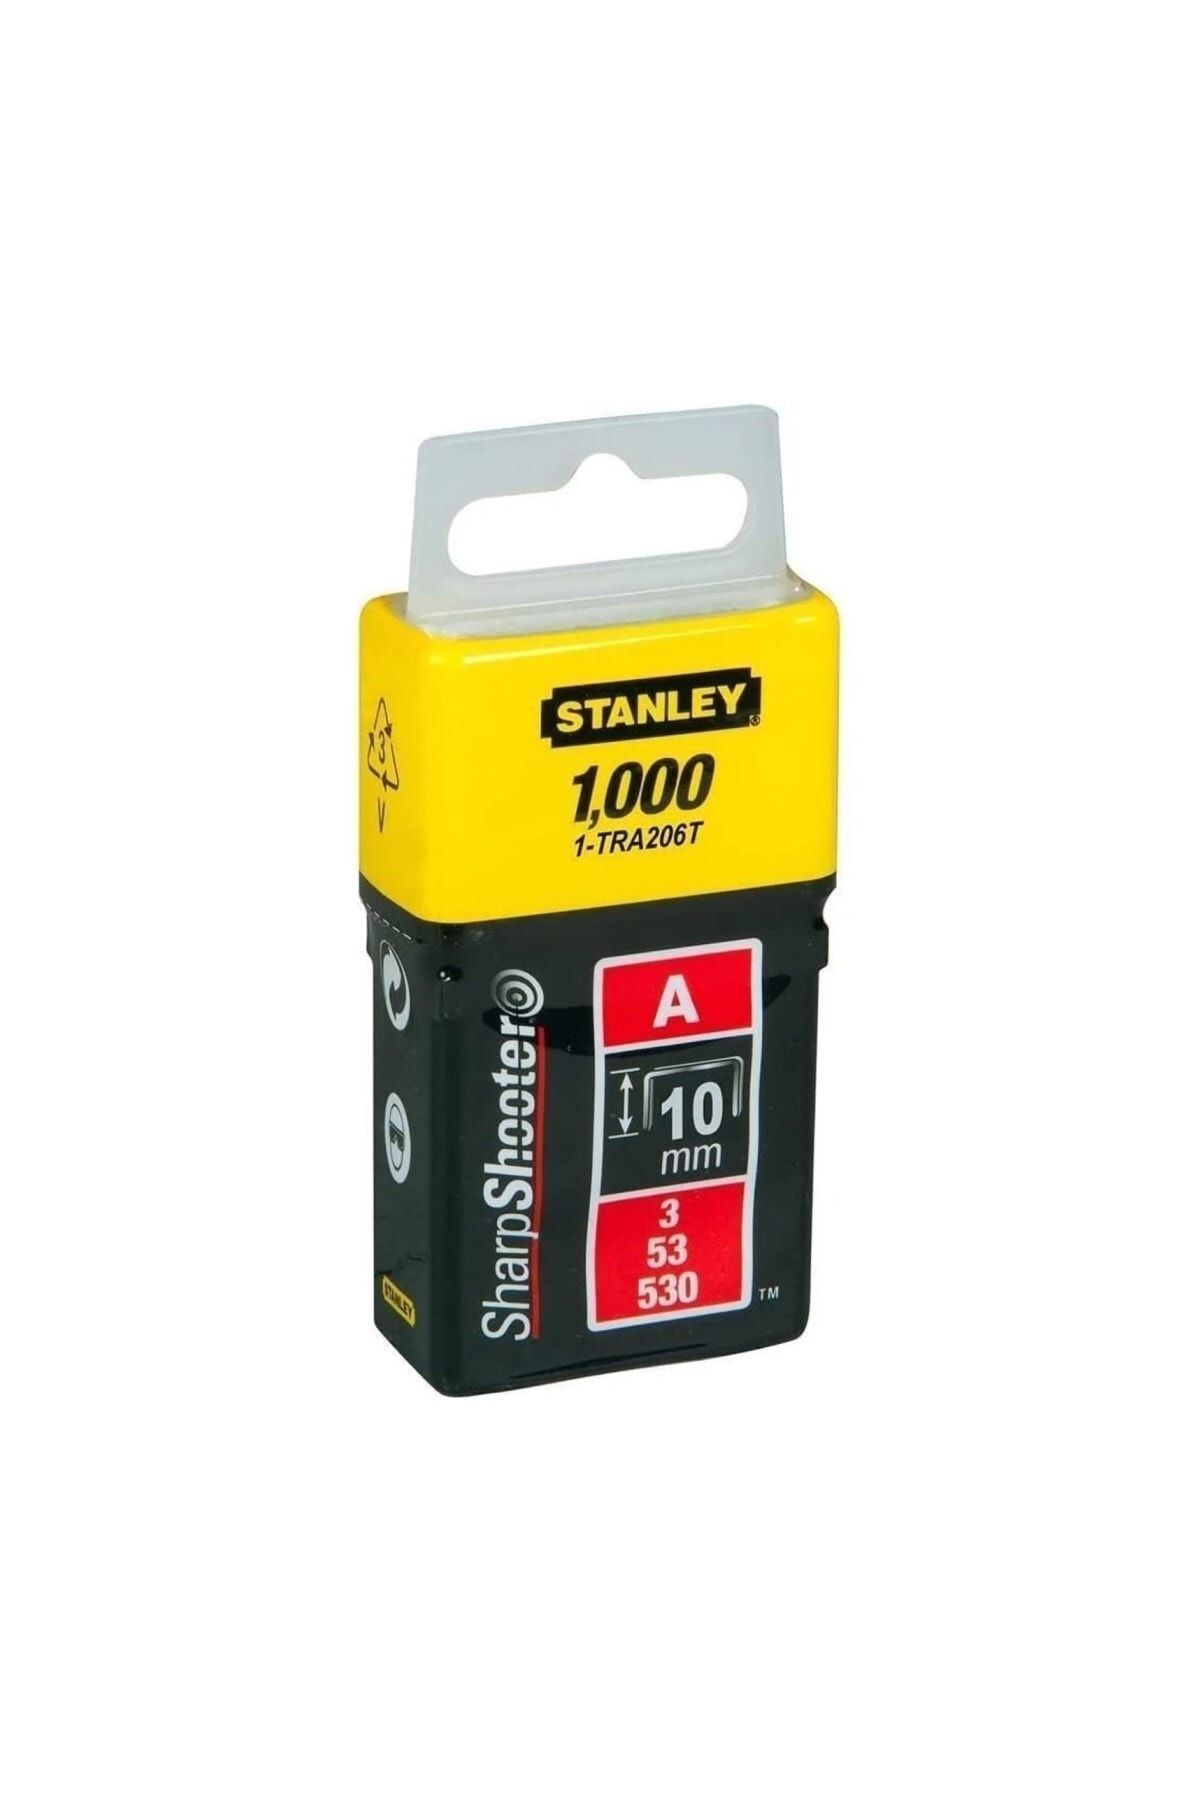 Stanley Zımba Teli 10mm 1000 Adet 1-tra206t